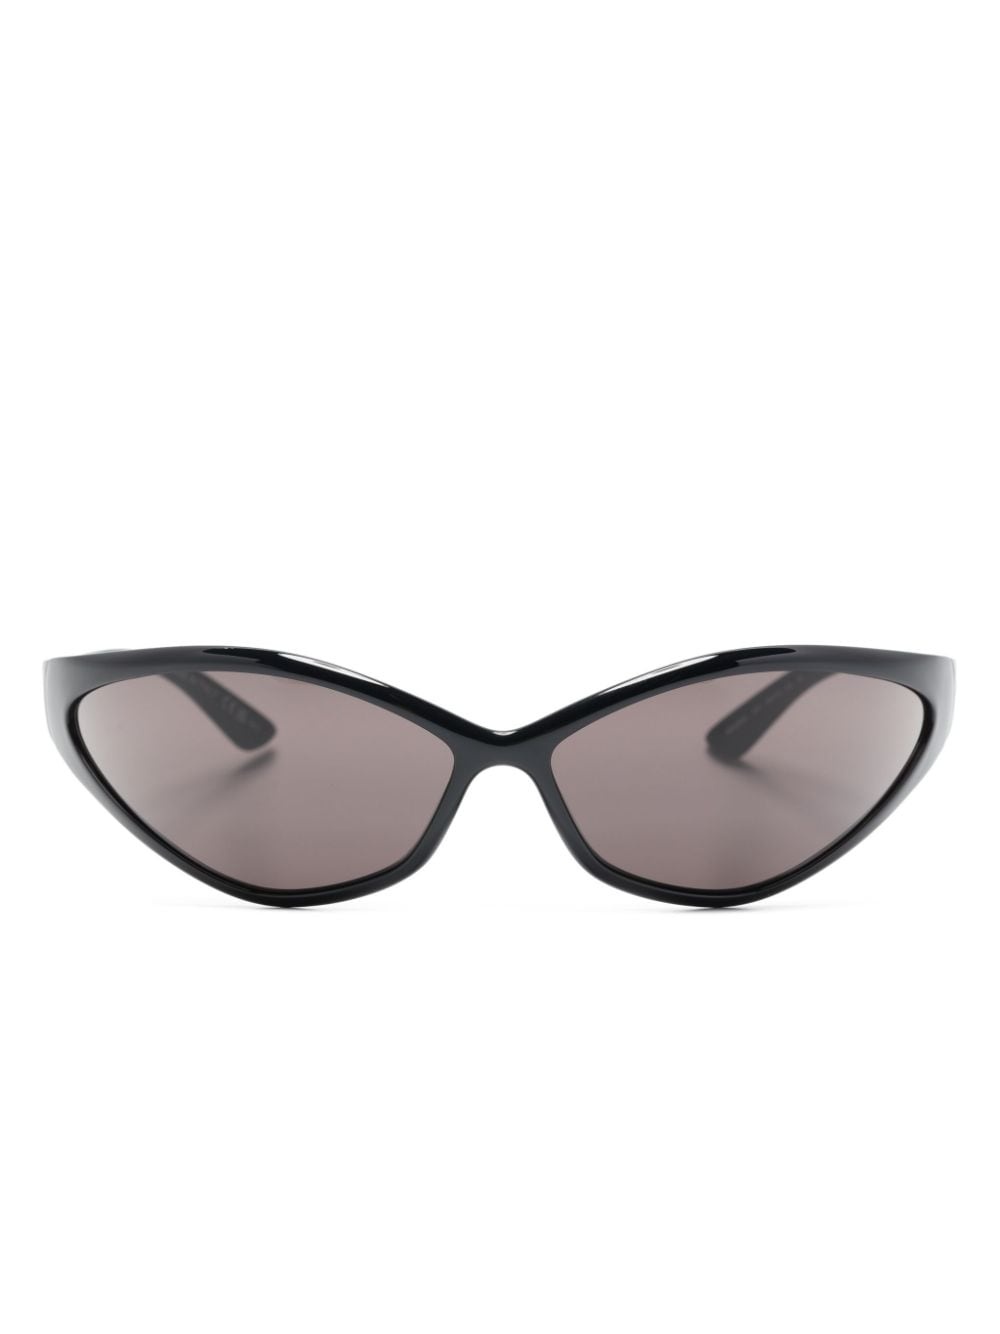 90s oval-frame sunglasses - 1